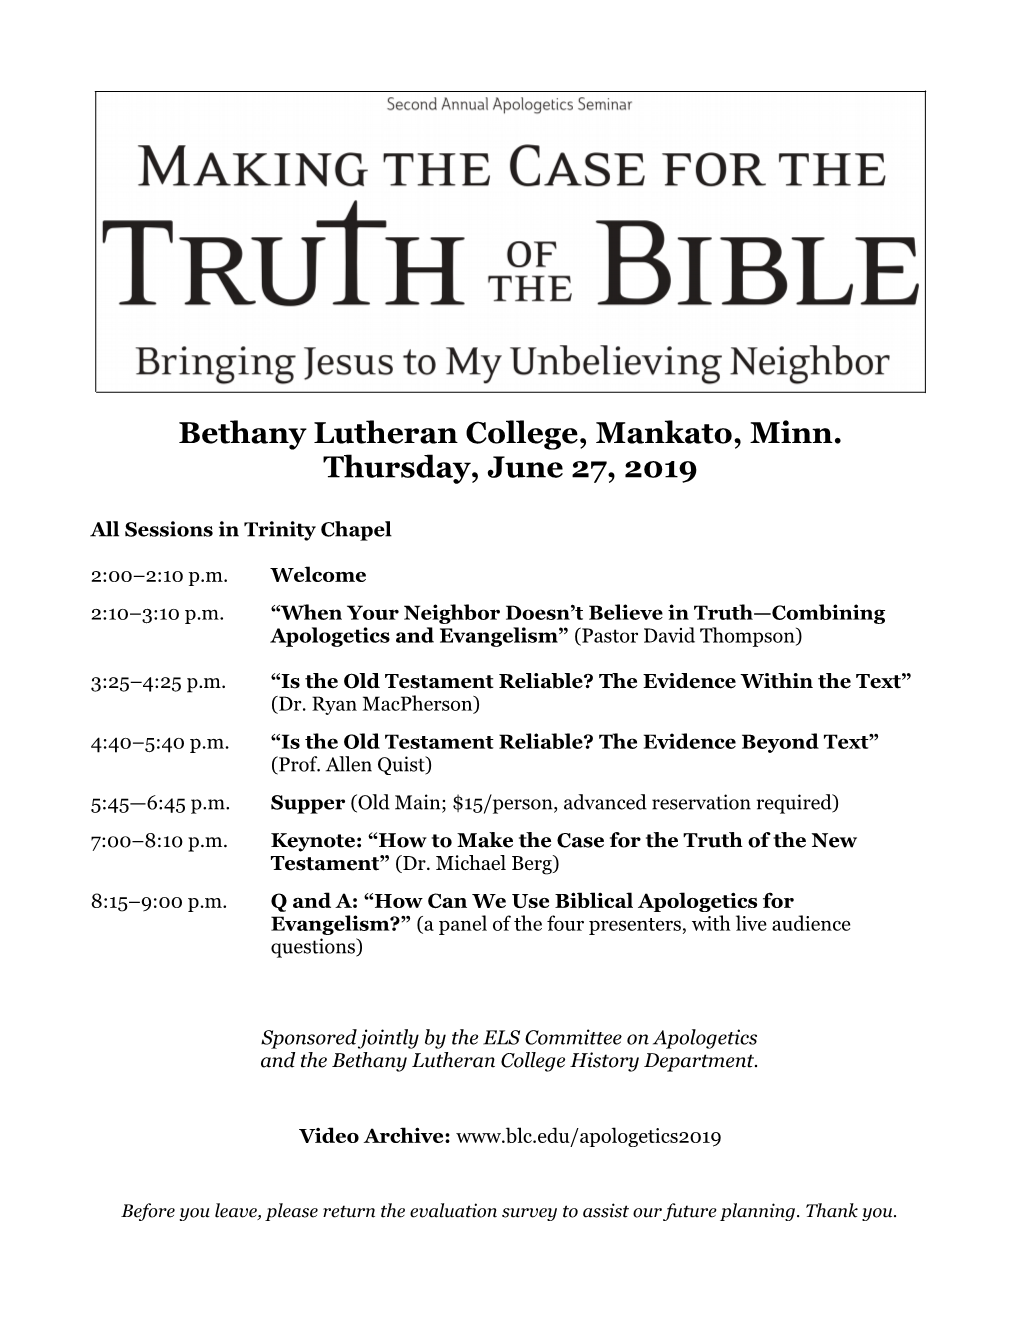 Bethany Lutheran College, Mankato, Minn. Thursday, June 27, 2019